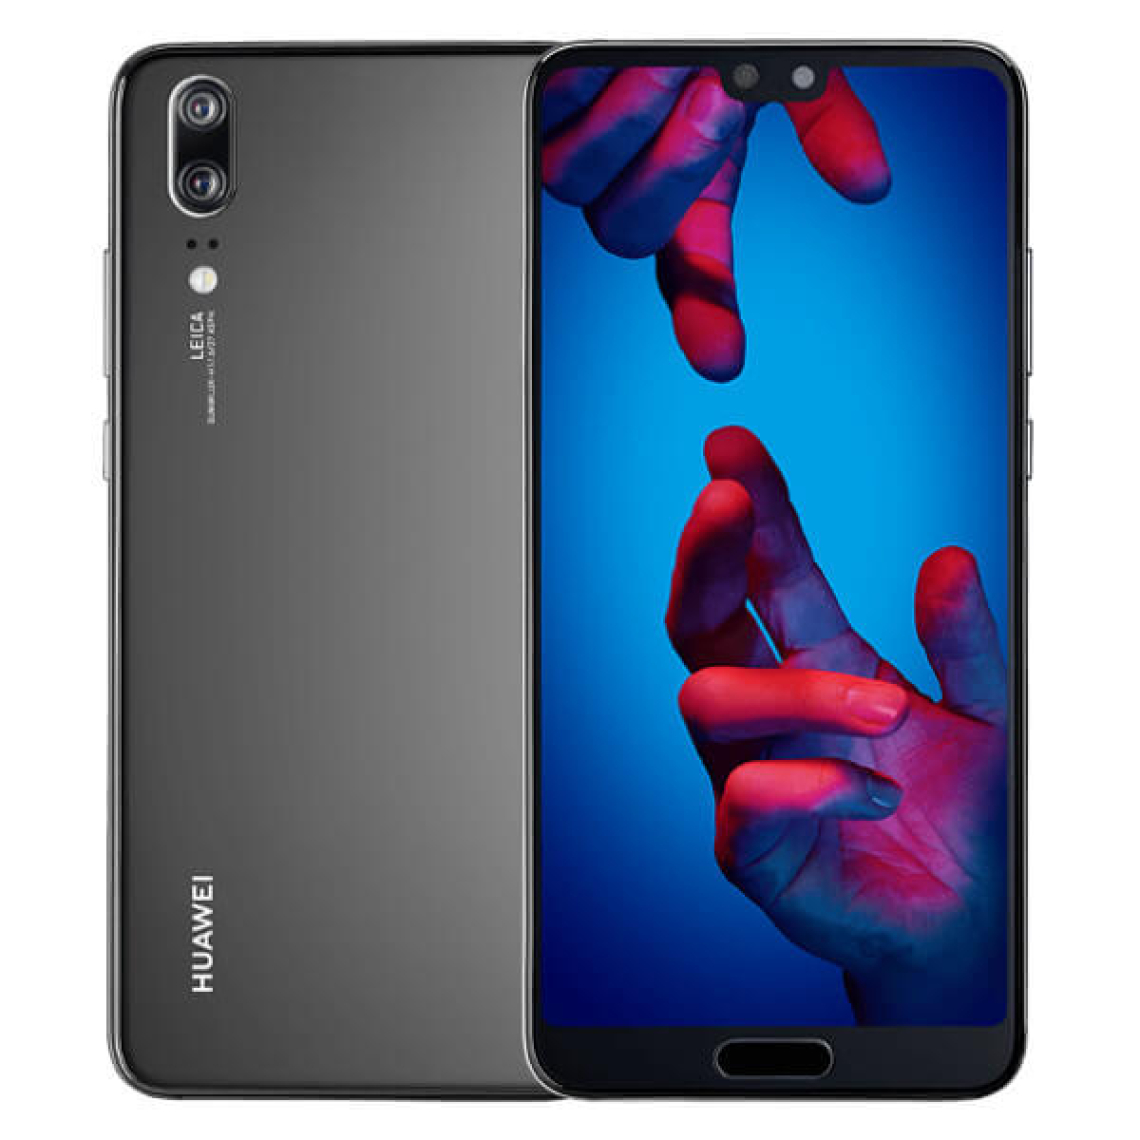 Huawei - Huawei P20 - Double SIM - 64Go, 4Go RAM - Noir - Smartphone Android